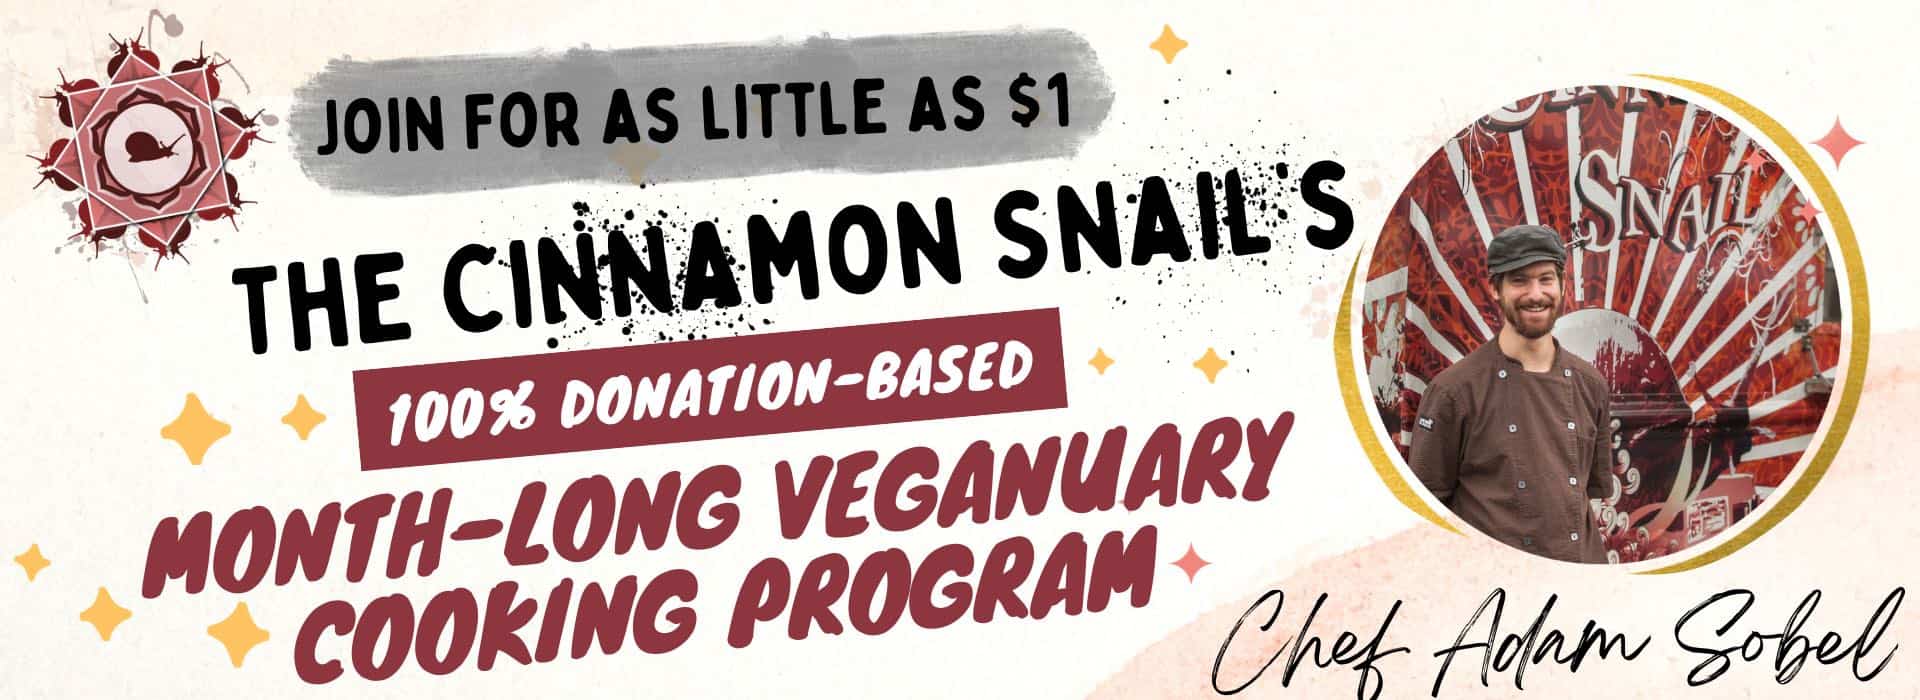 The cinnamon snail's month long vegetarian cooking program offers online vegan cooking classes.